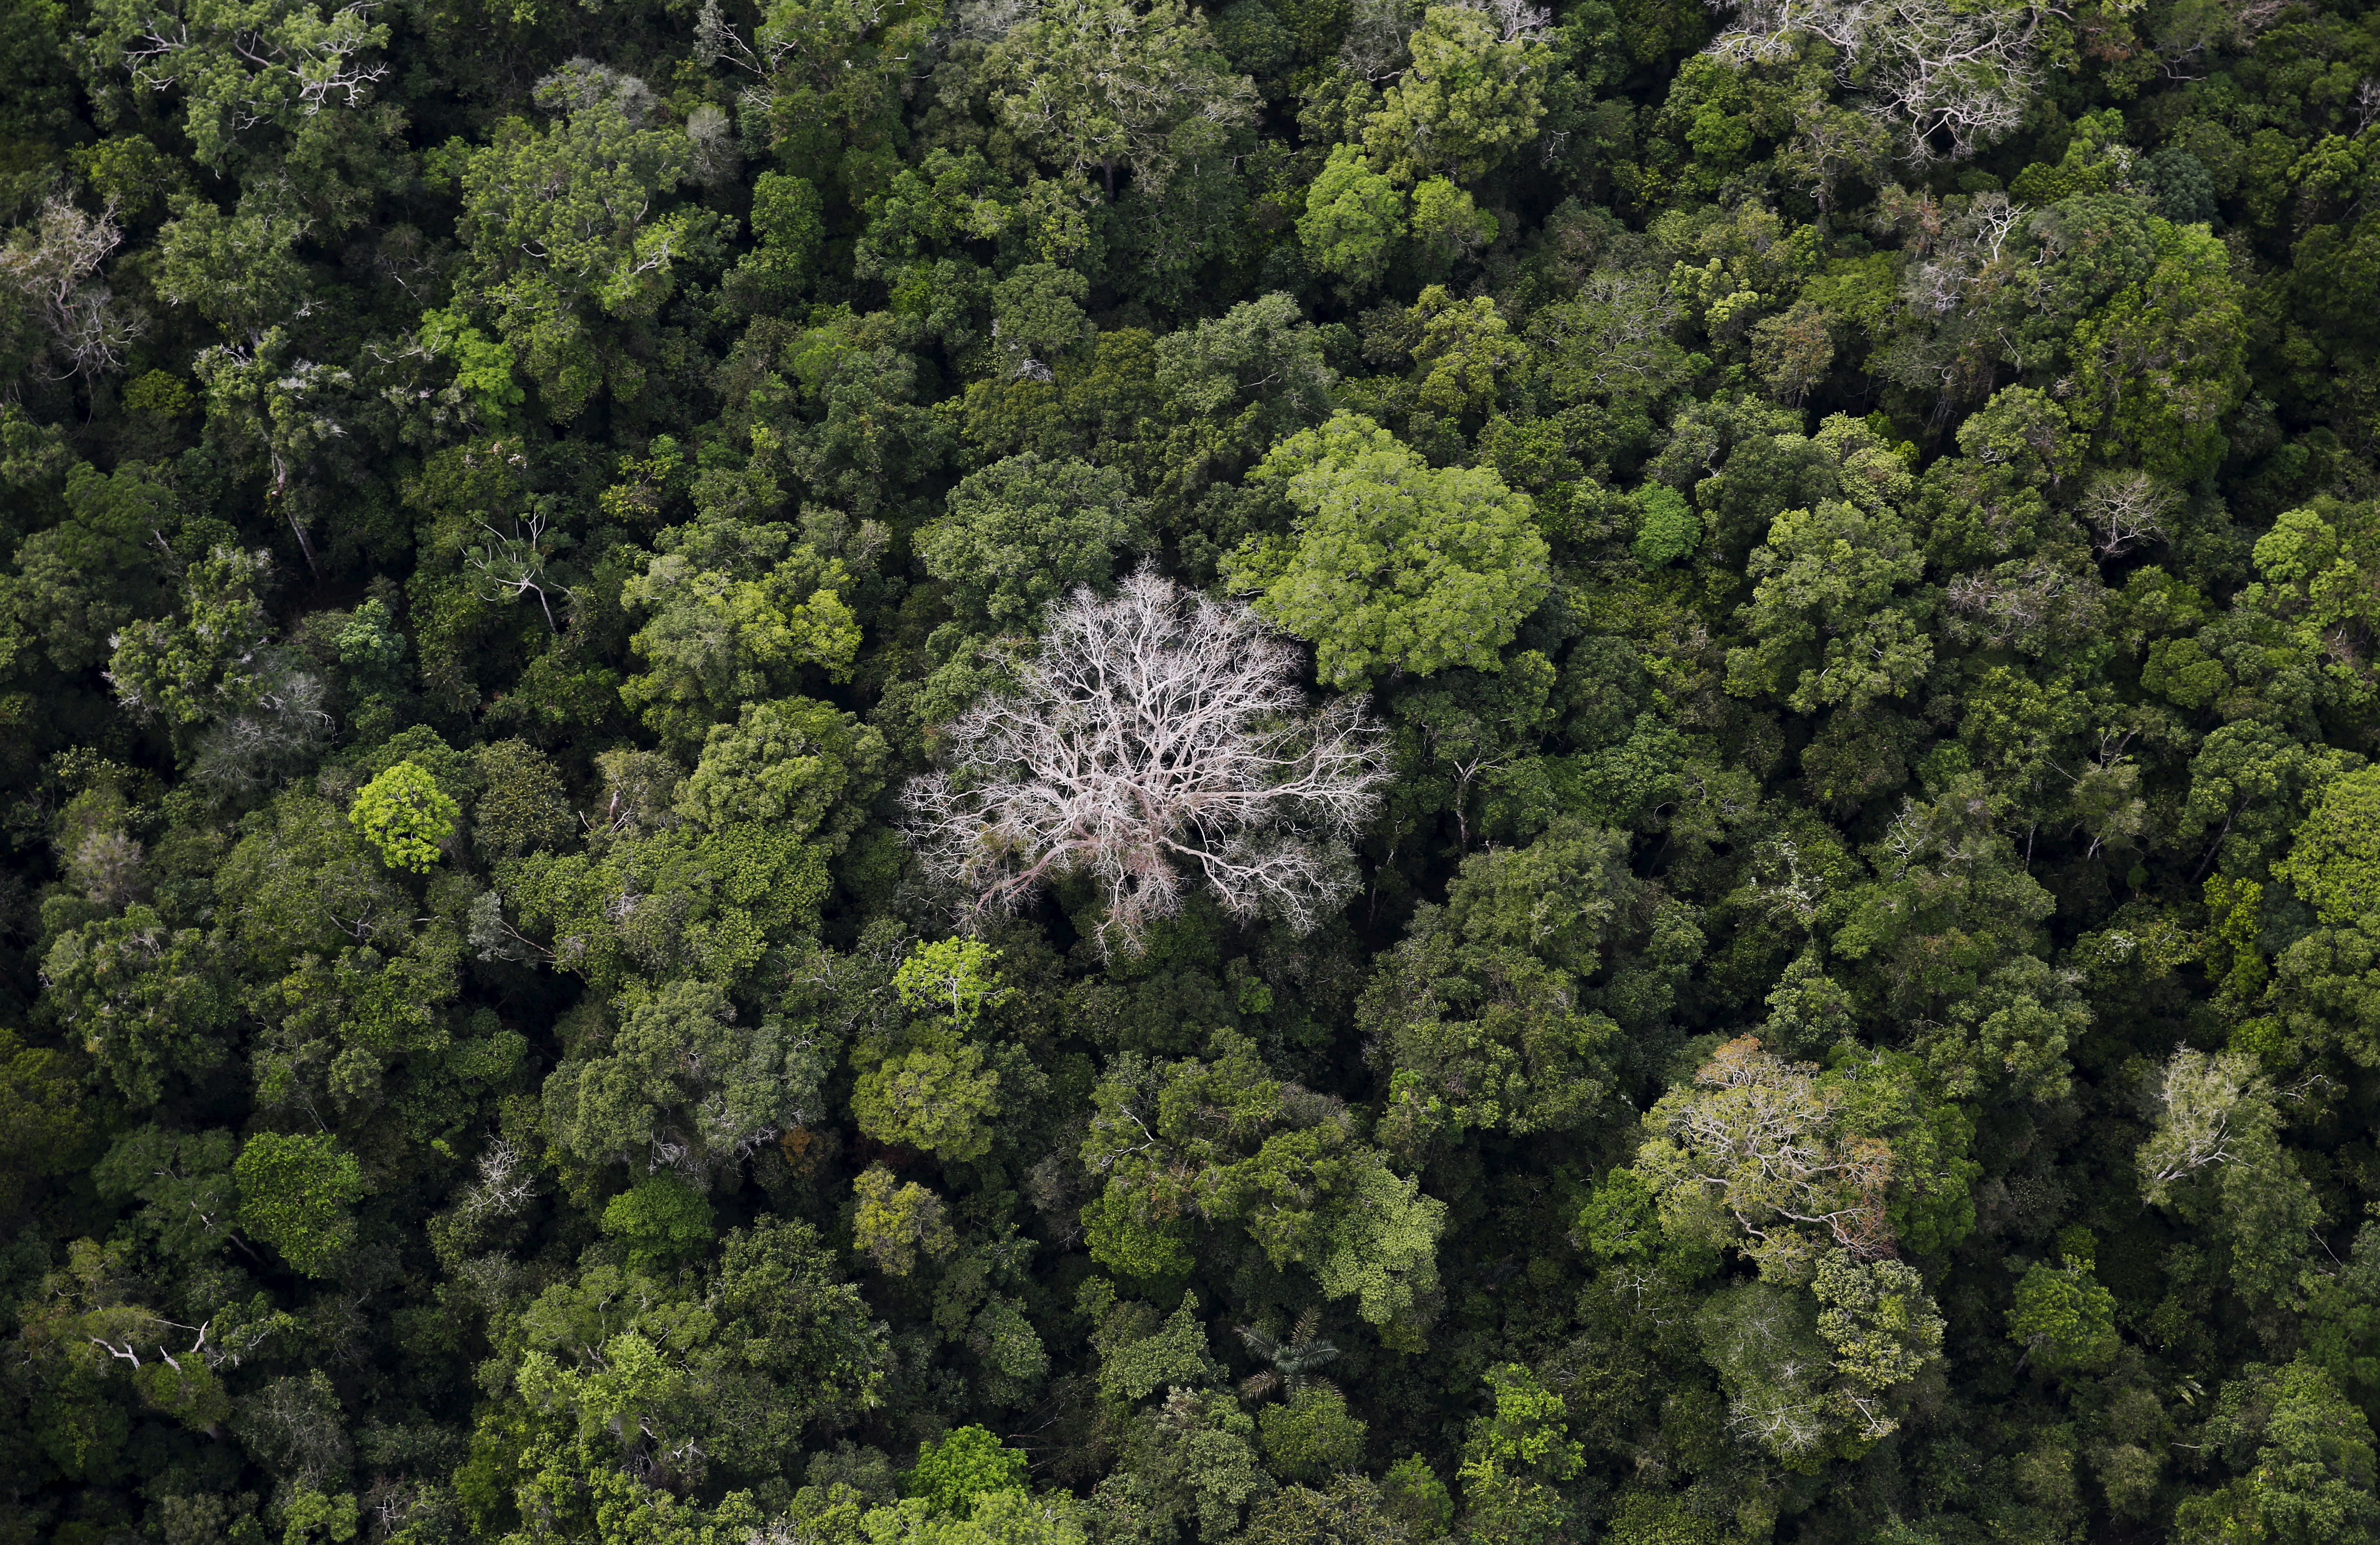 Brazil, France invest $1.1b in Amazon rainforest